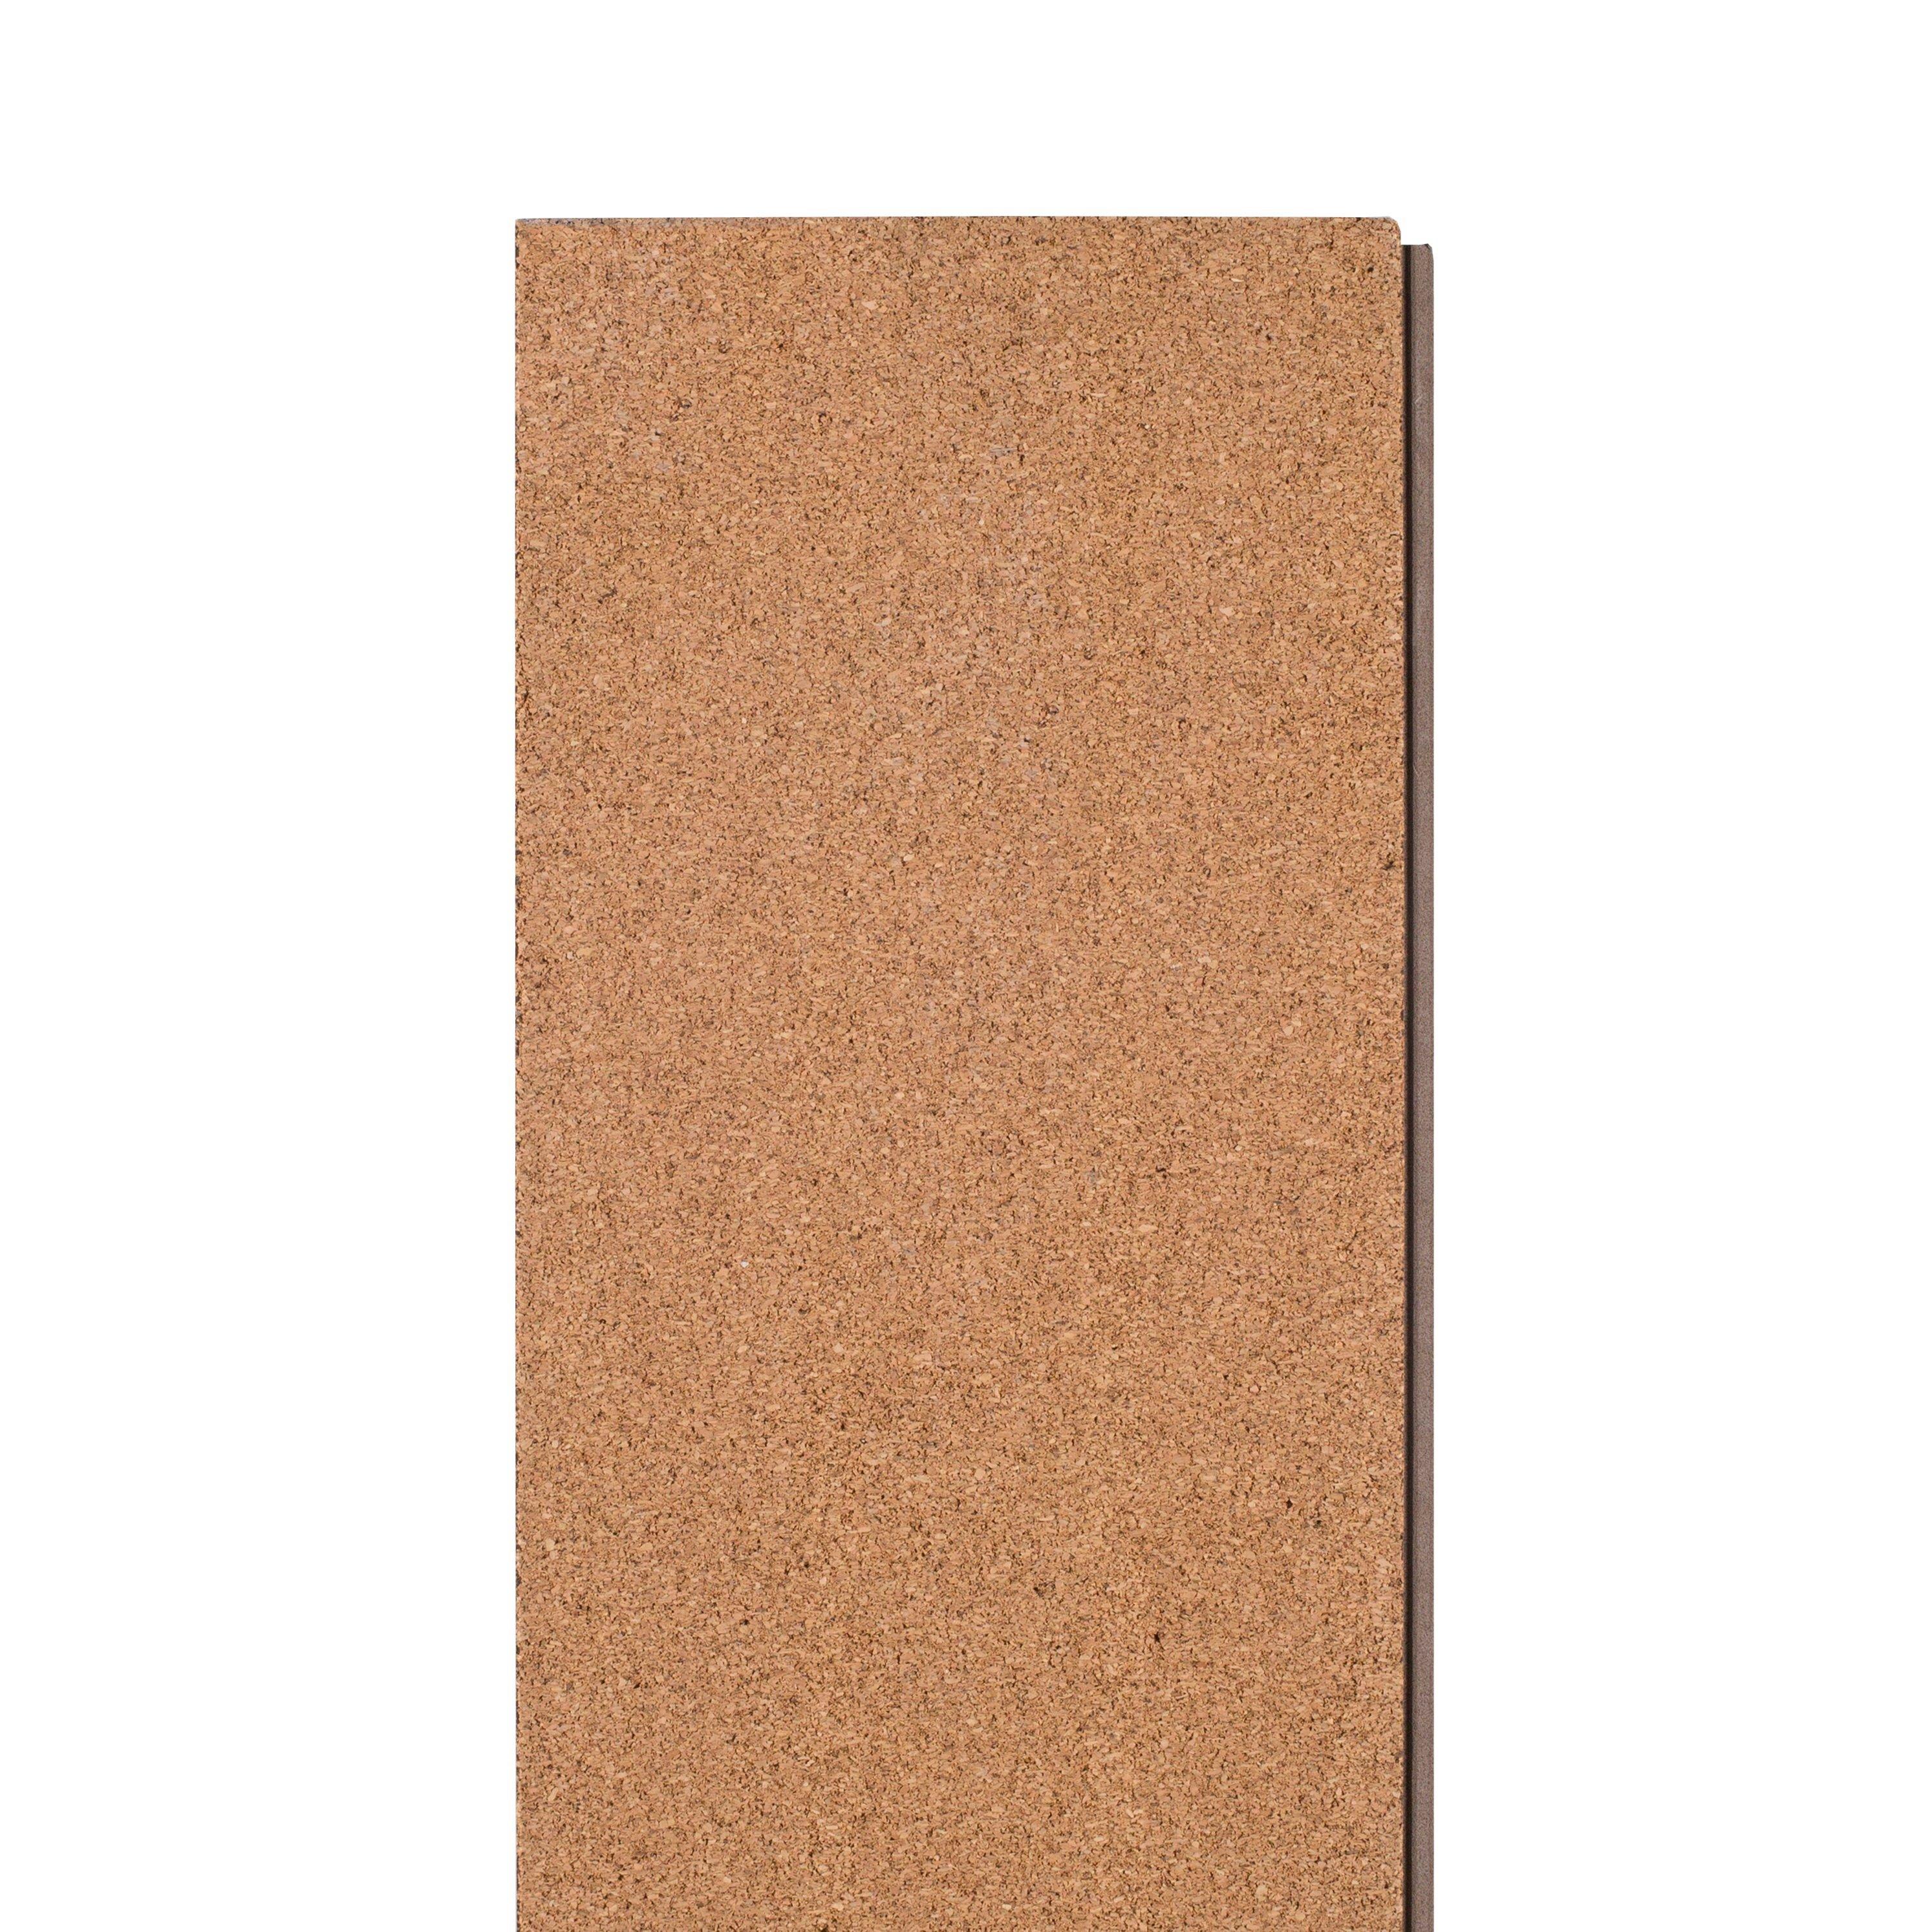 Marigold Sand Rigid Core Luxury Vinyl Plank - Cork Back